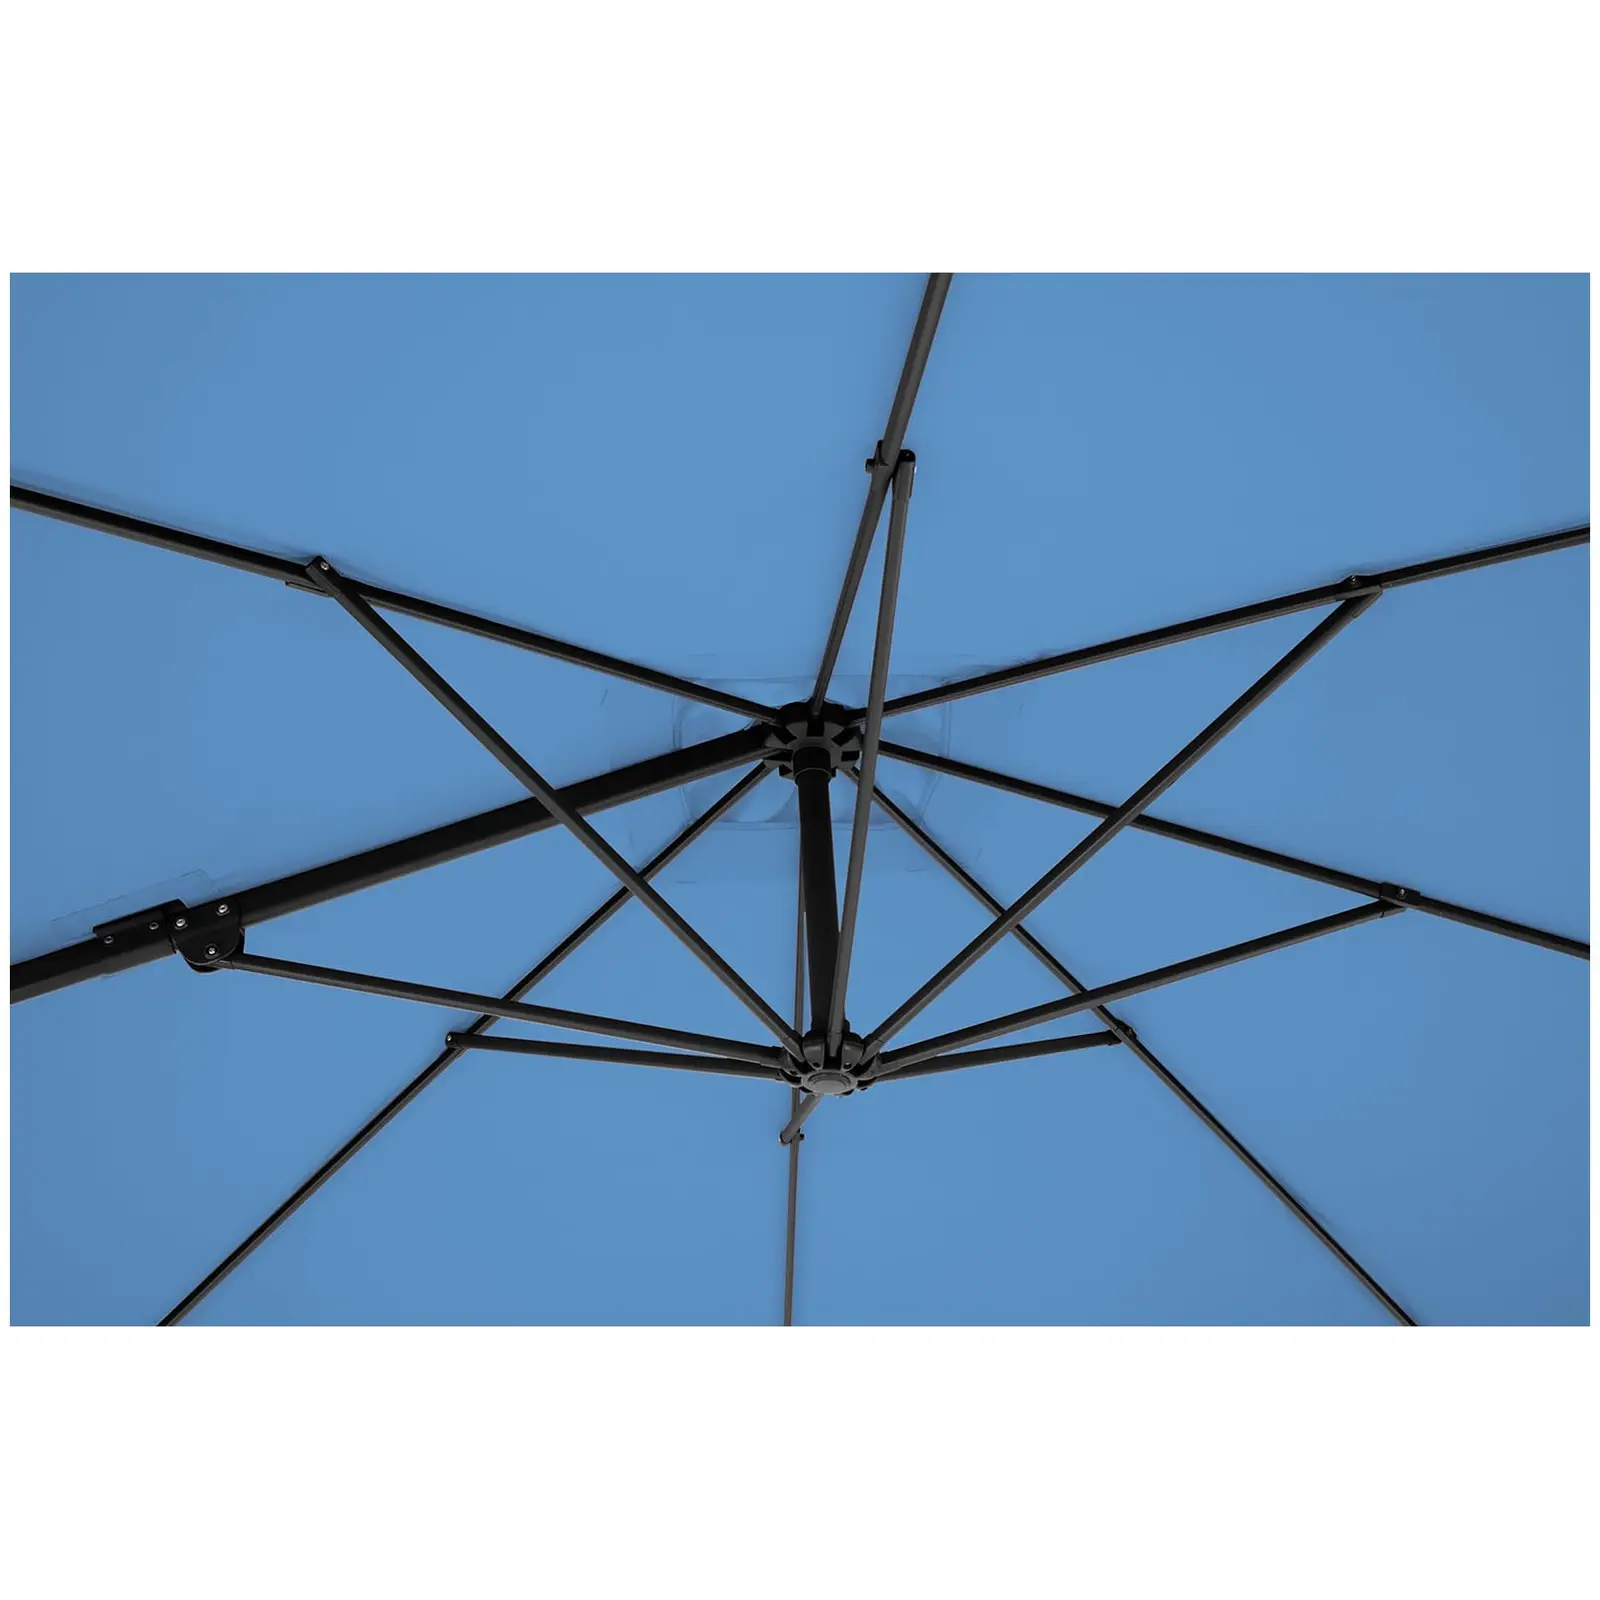 Hanging Parasol - blue - square - 250 x 250 cm - rotatable